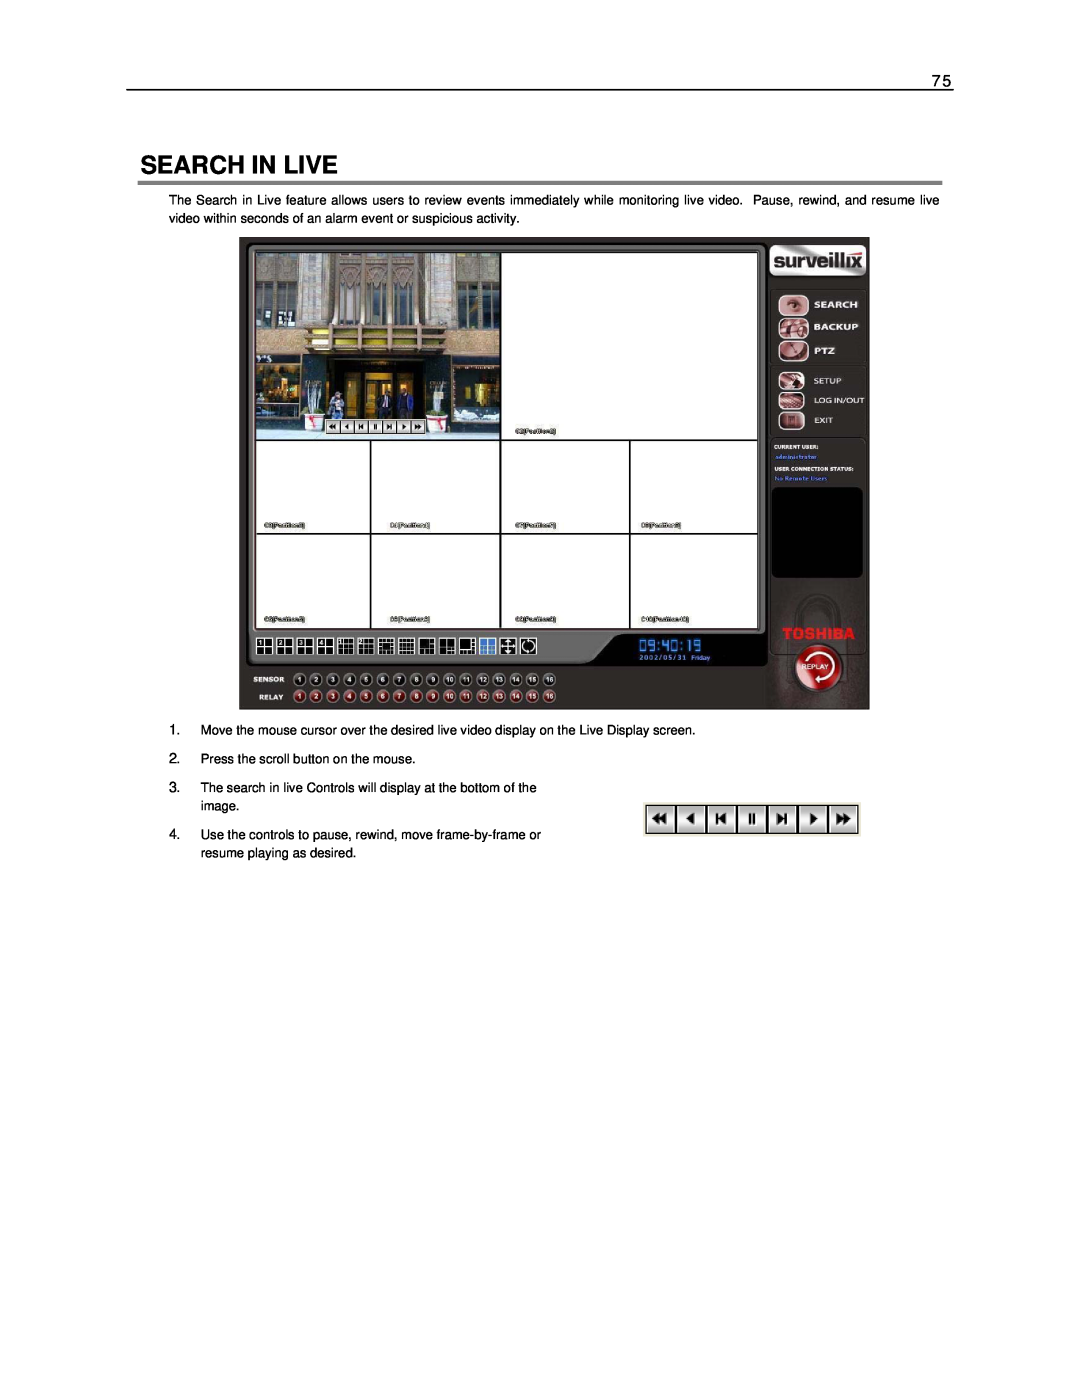 Toshiba NVS32-X, NVS16-X, NVS8-X user manual Search In Live 